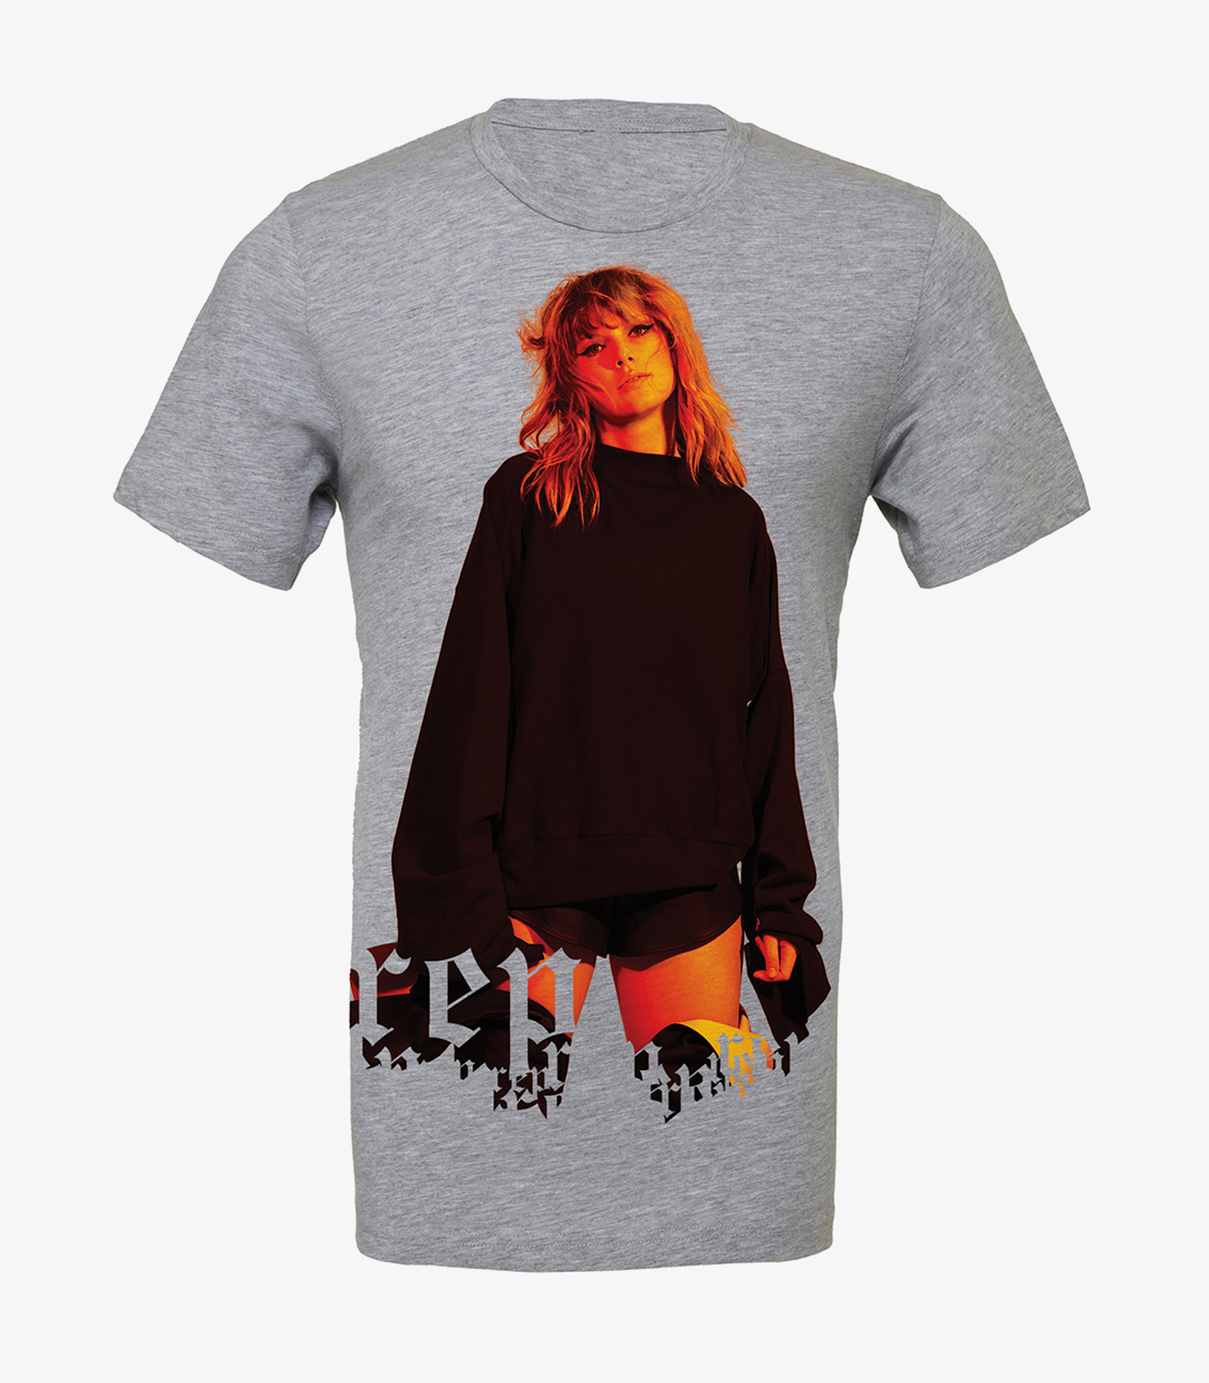 Taylor Swift reputation rep t shirt sold at Target